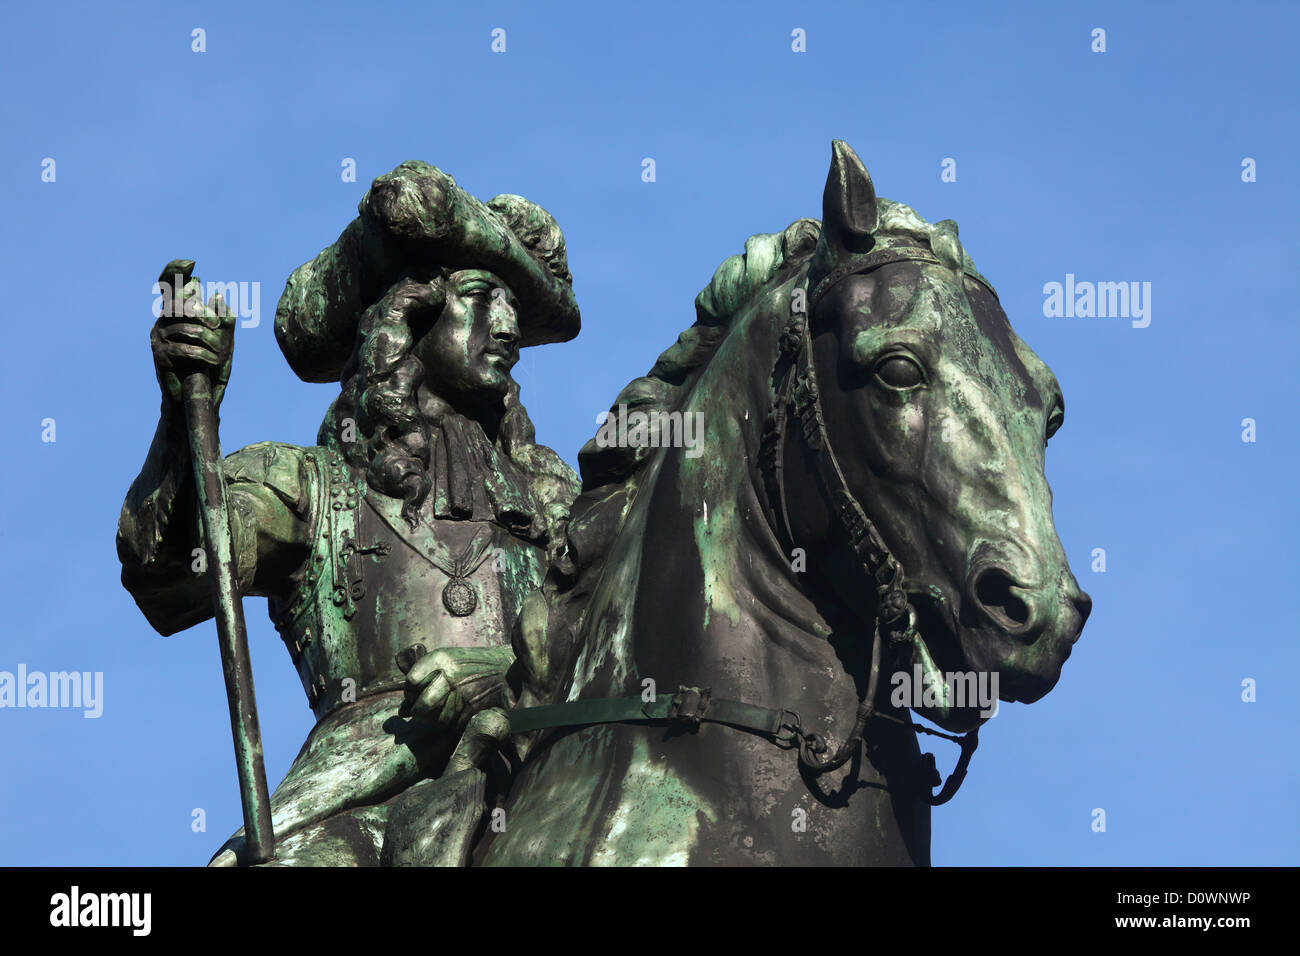 Statue of William III of Orange (1650 - 1702). Stock Photo